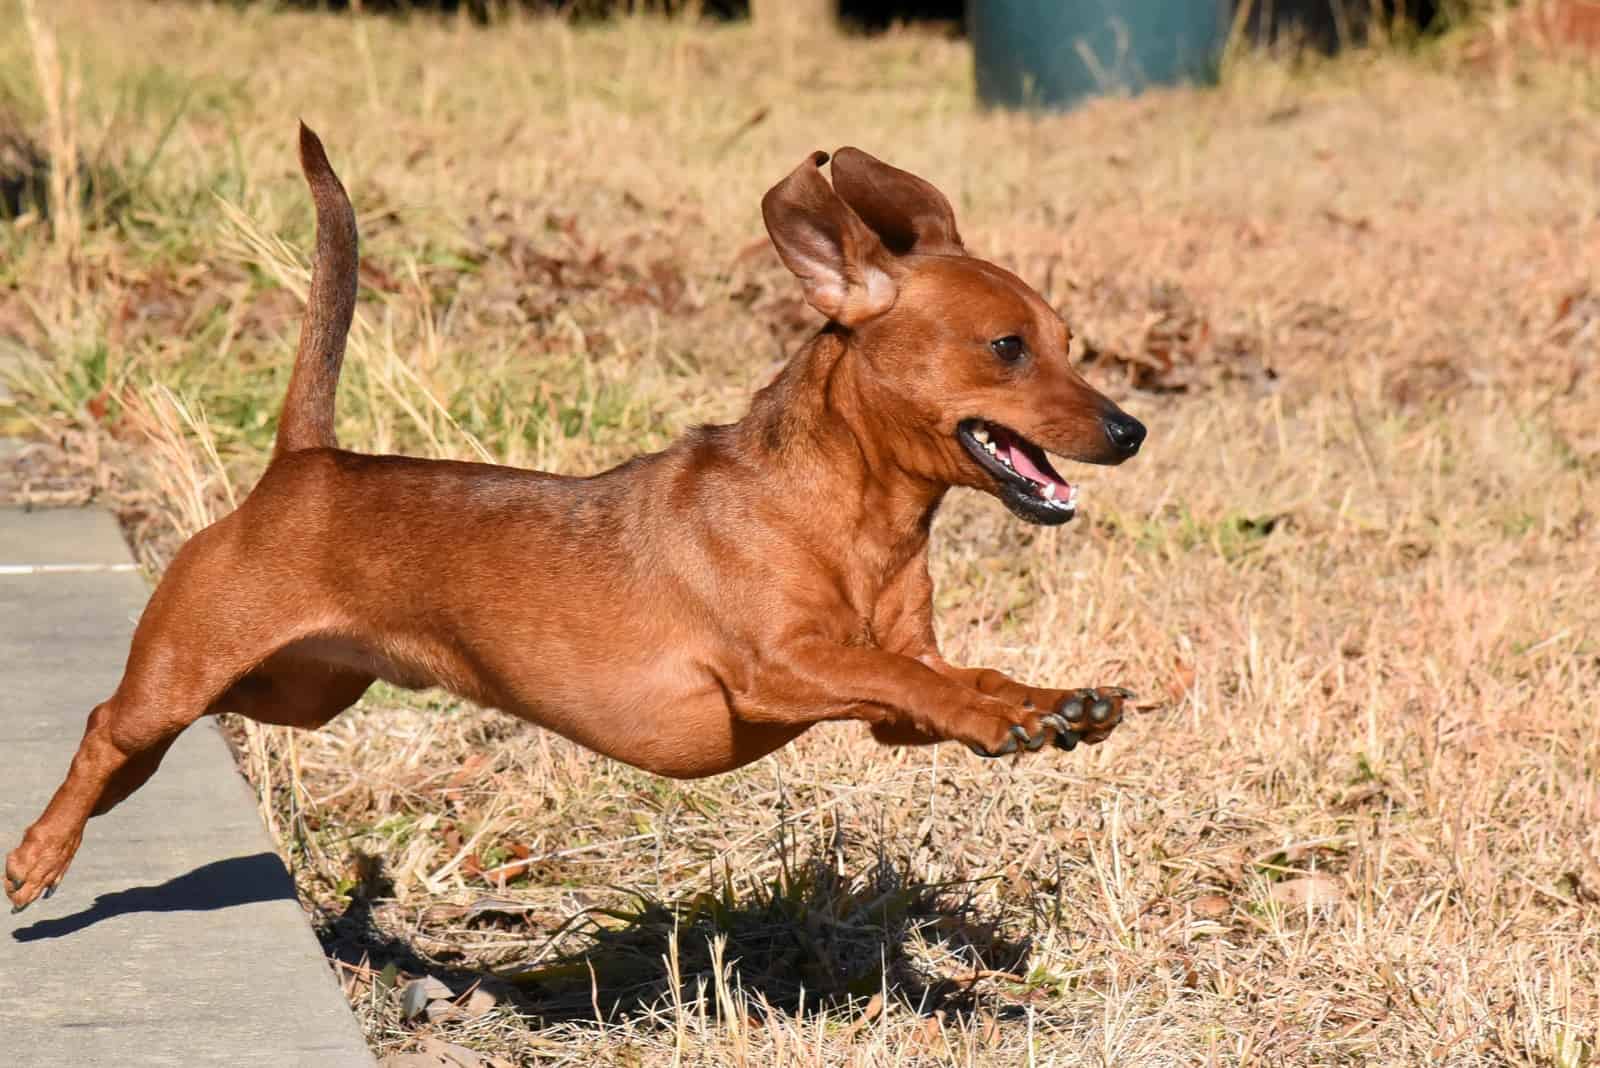 Dachshund running and jumping